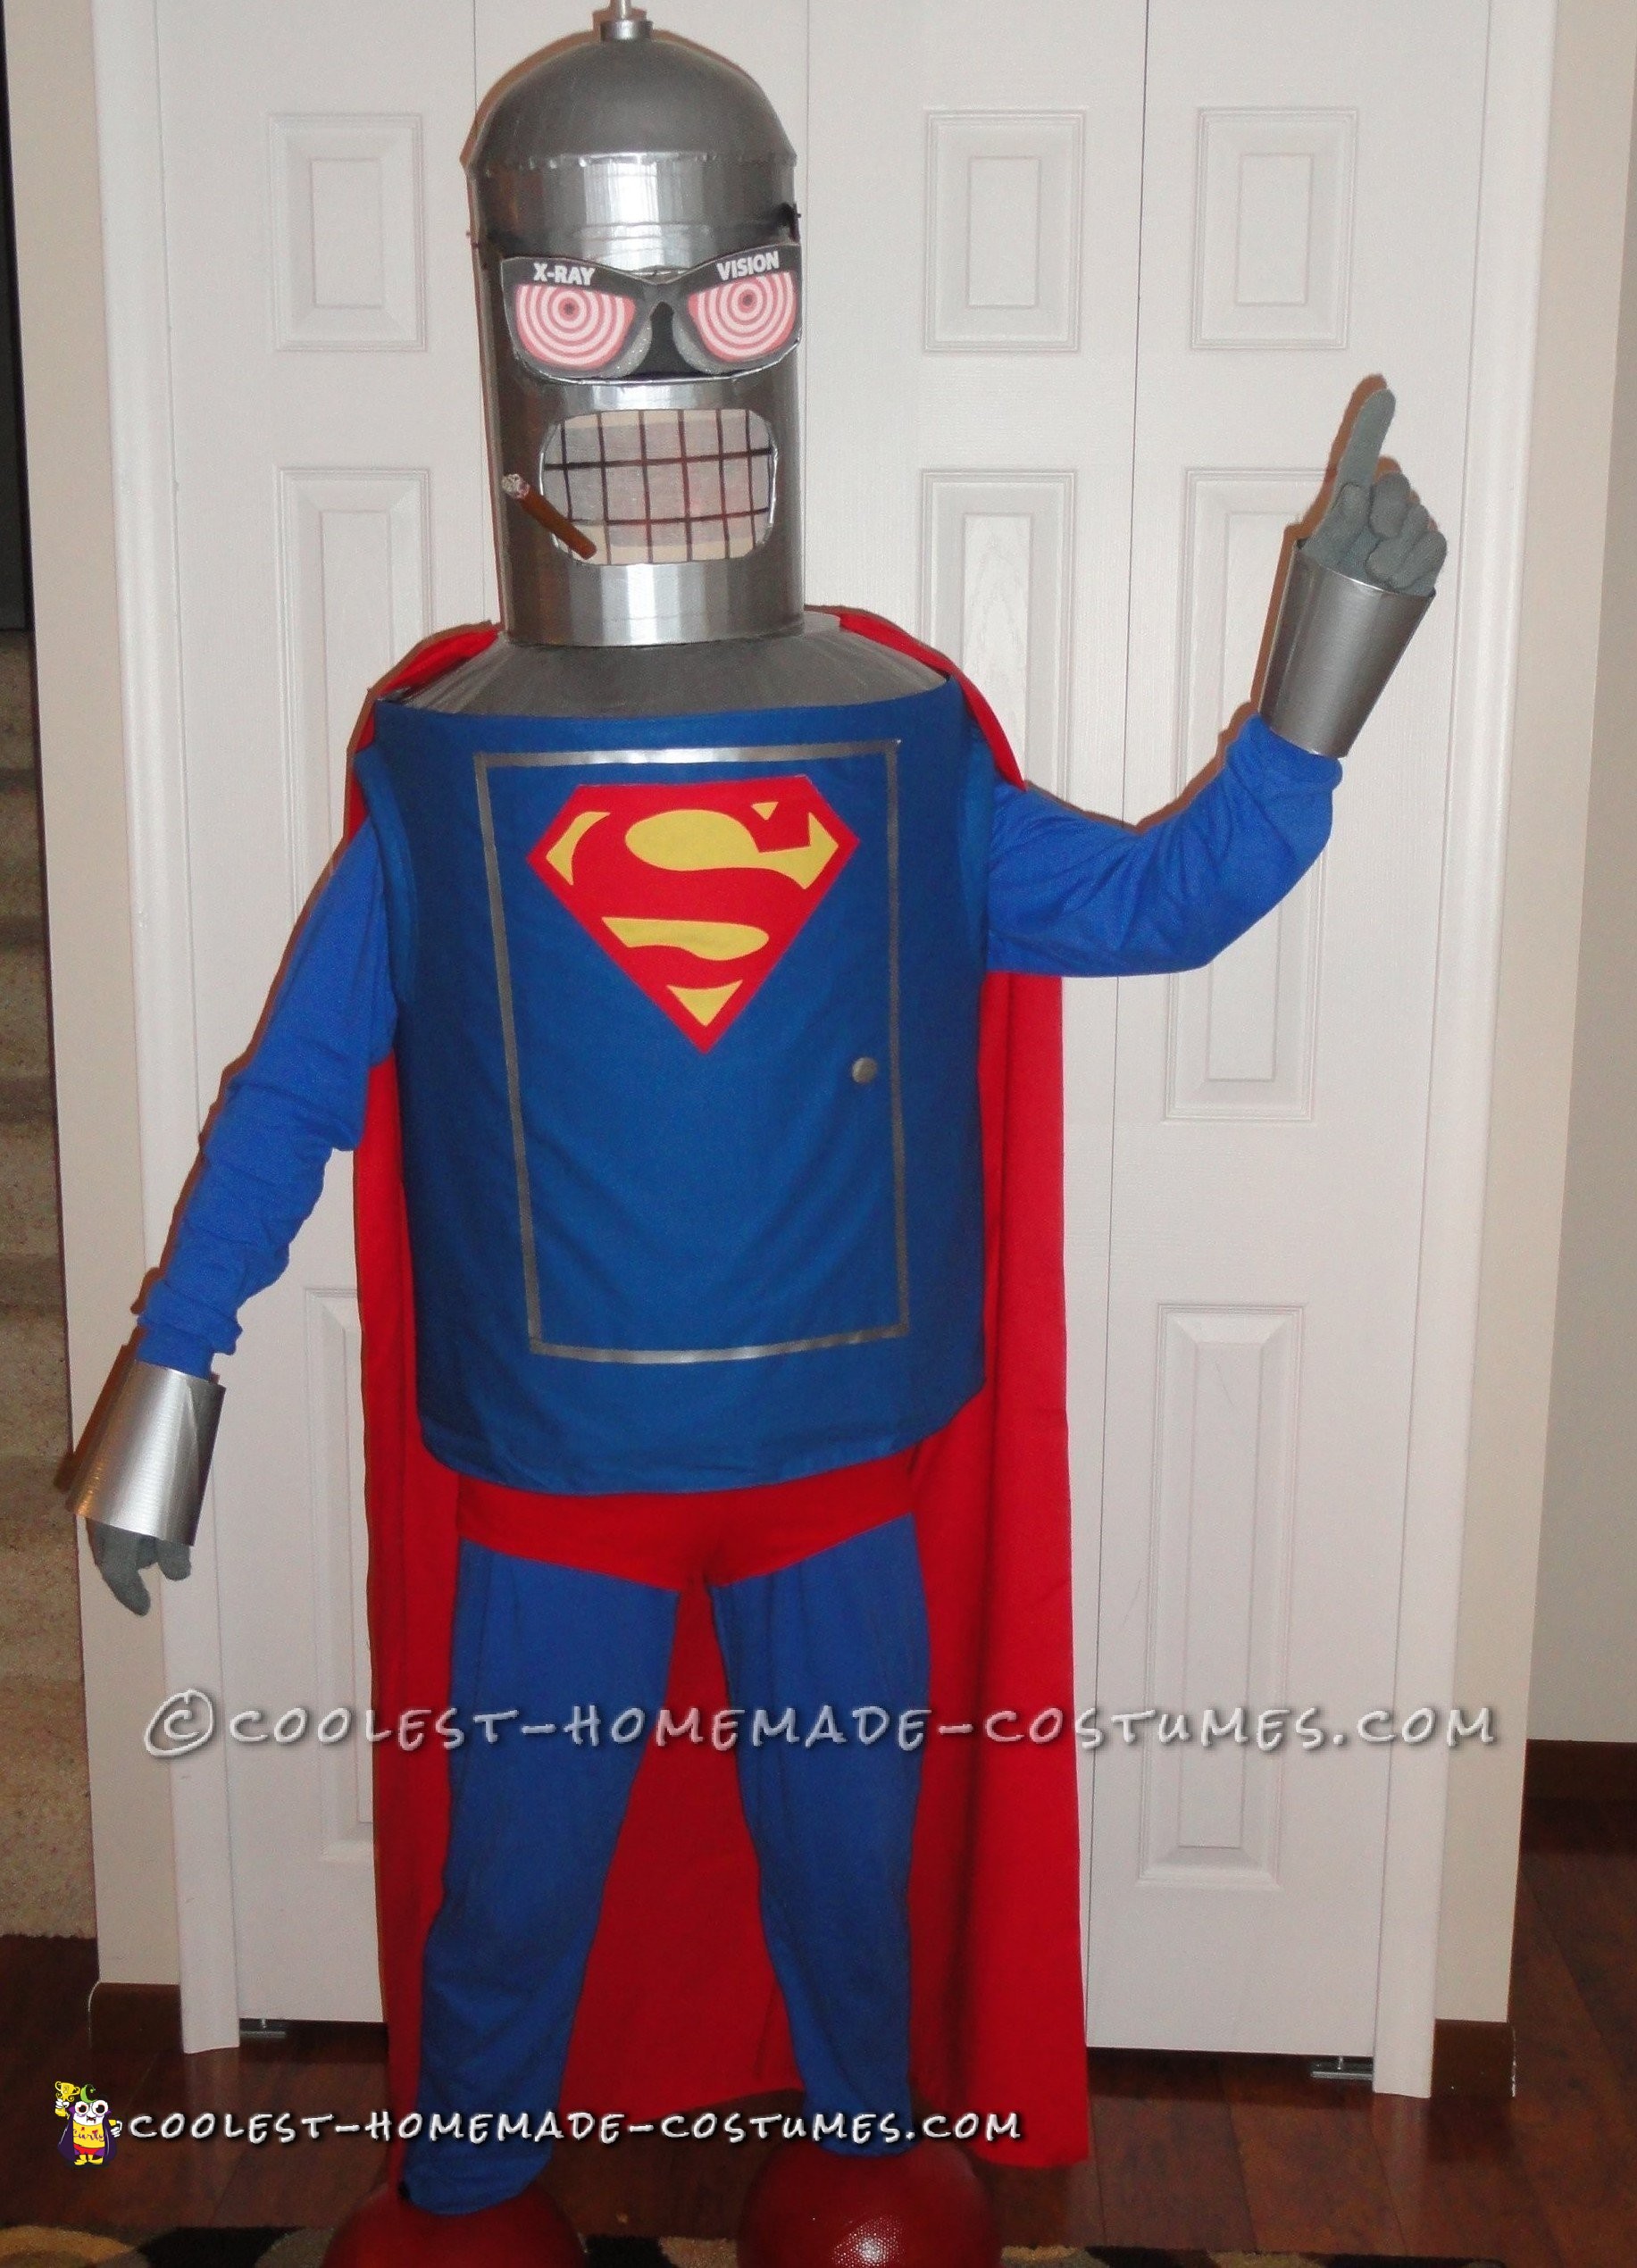 Cool Homemade Comic Convention Costume Ideas: Super Bender Futurama's Man of Steel